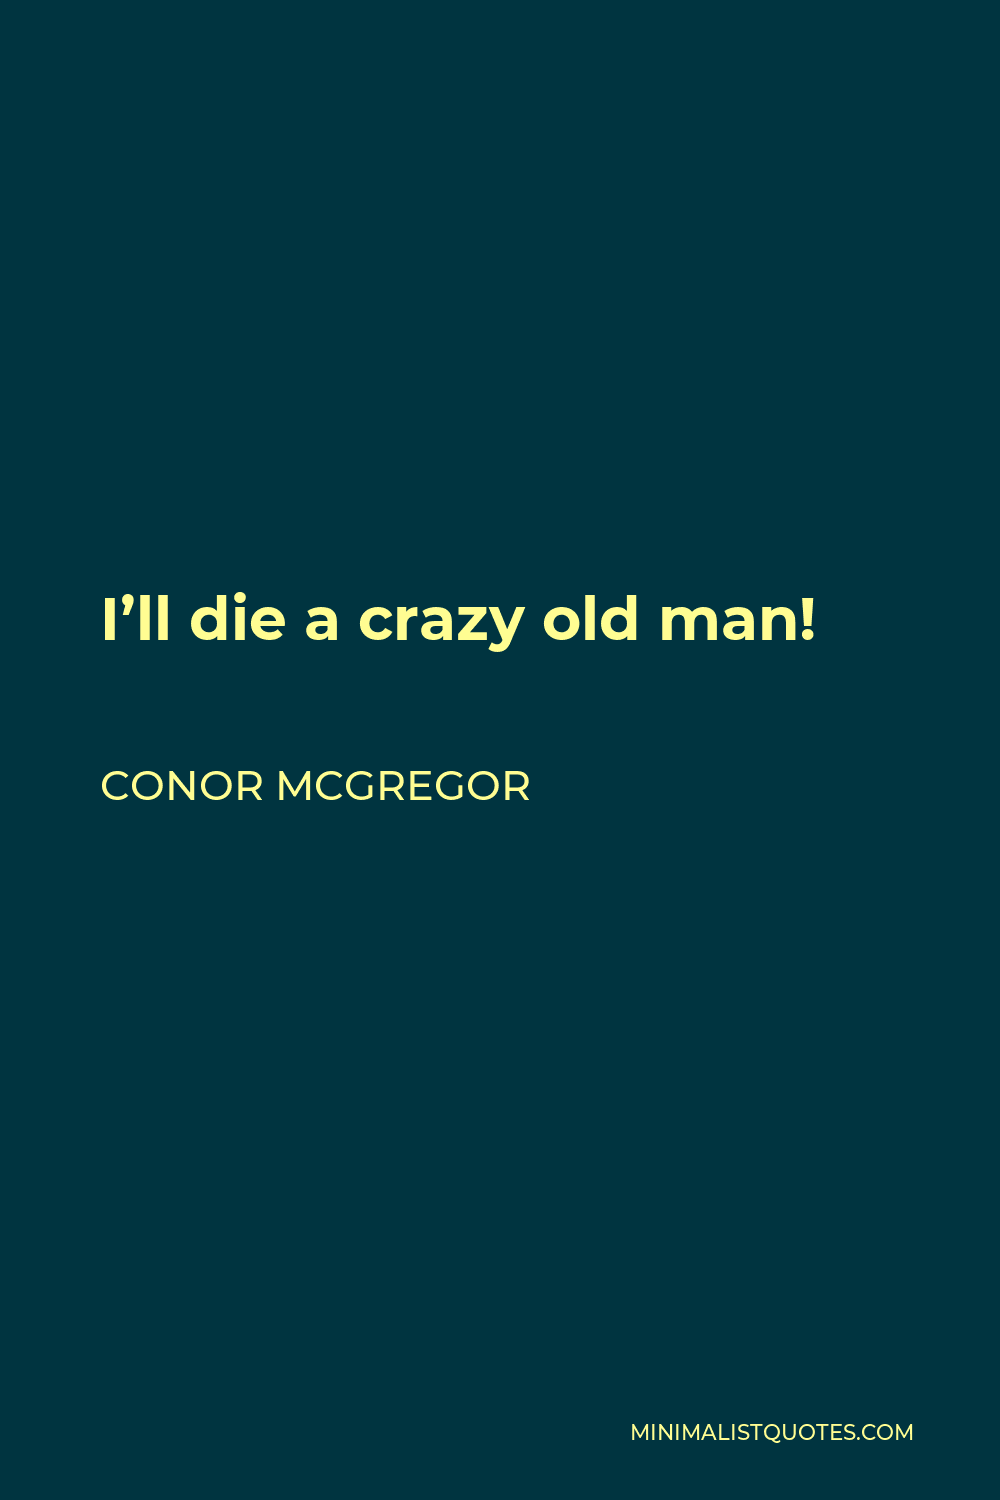 Conor Mcgregor Quote: I'Ll Die A Crazy Old Man!